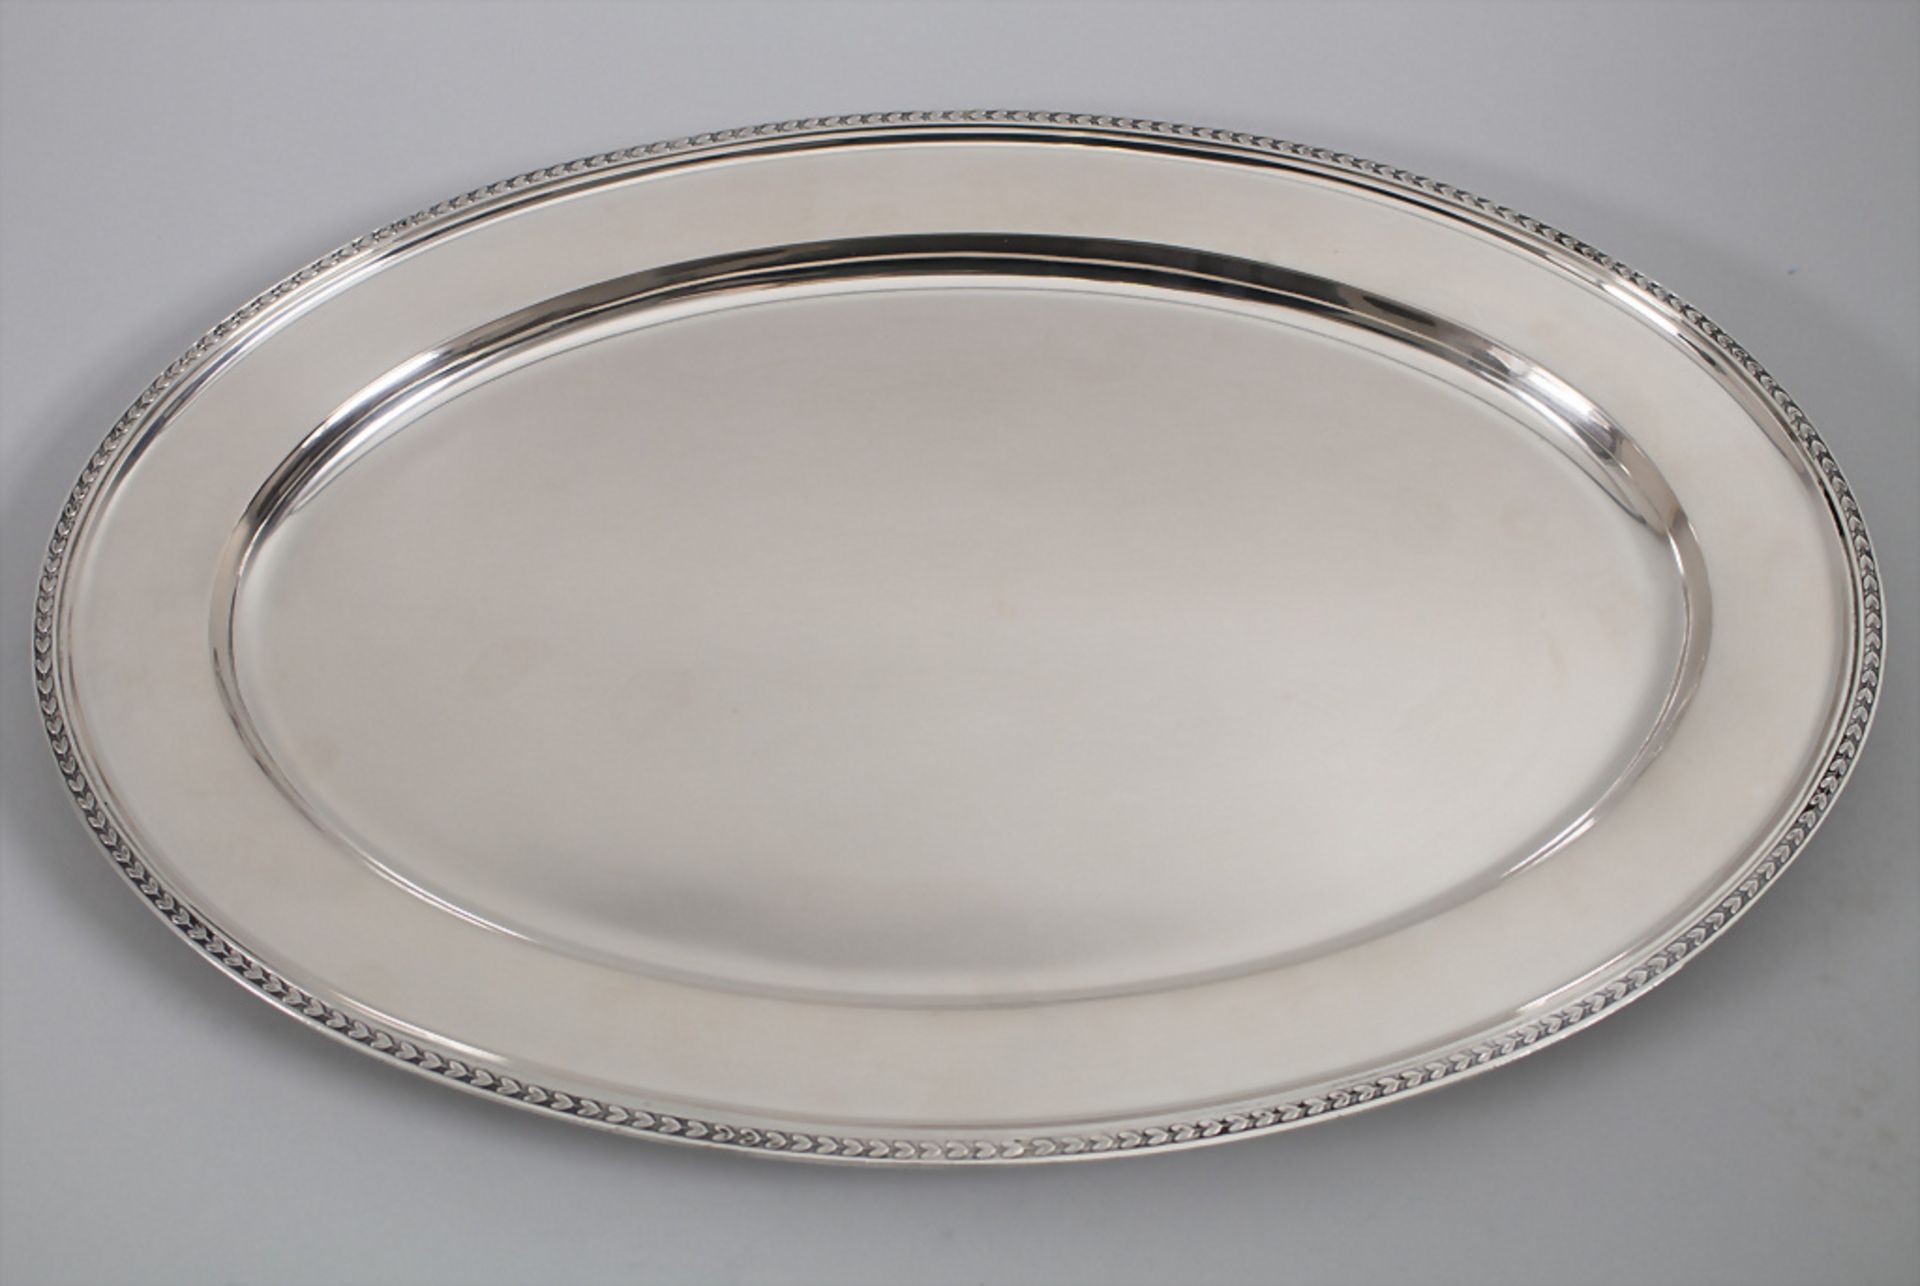 Große ovale Platte / A large oval silver plate, J.M. van Kempen, The Hague / Den Haag, 1917